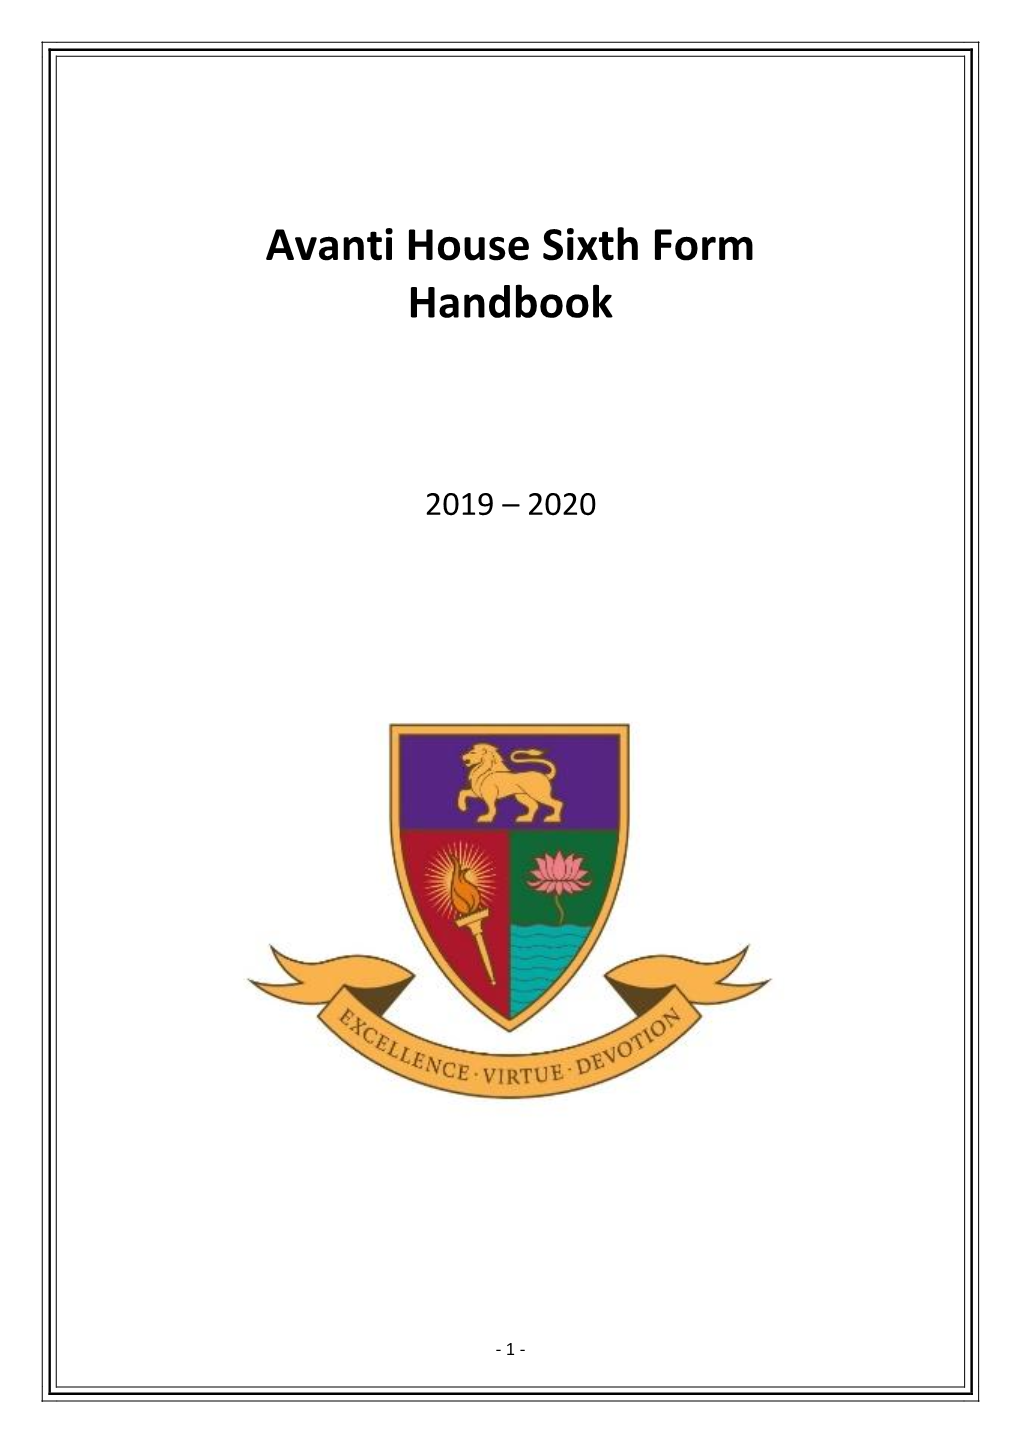 Avanti House Sixth Form Handbook